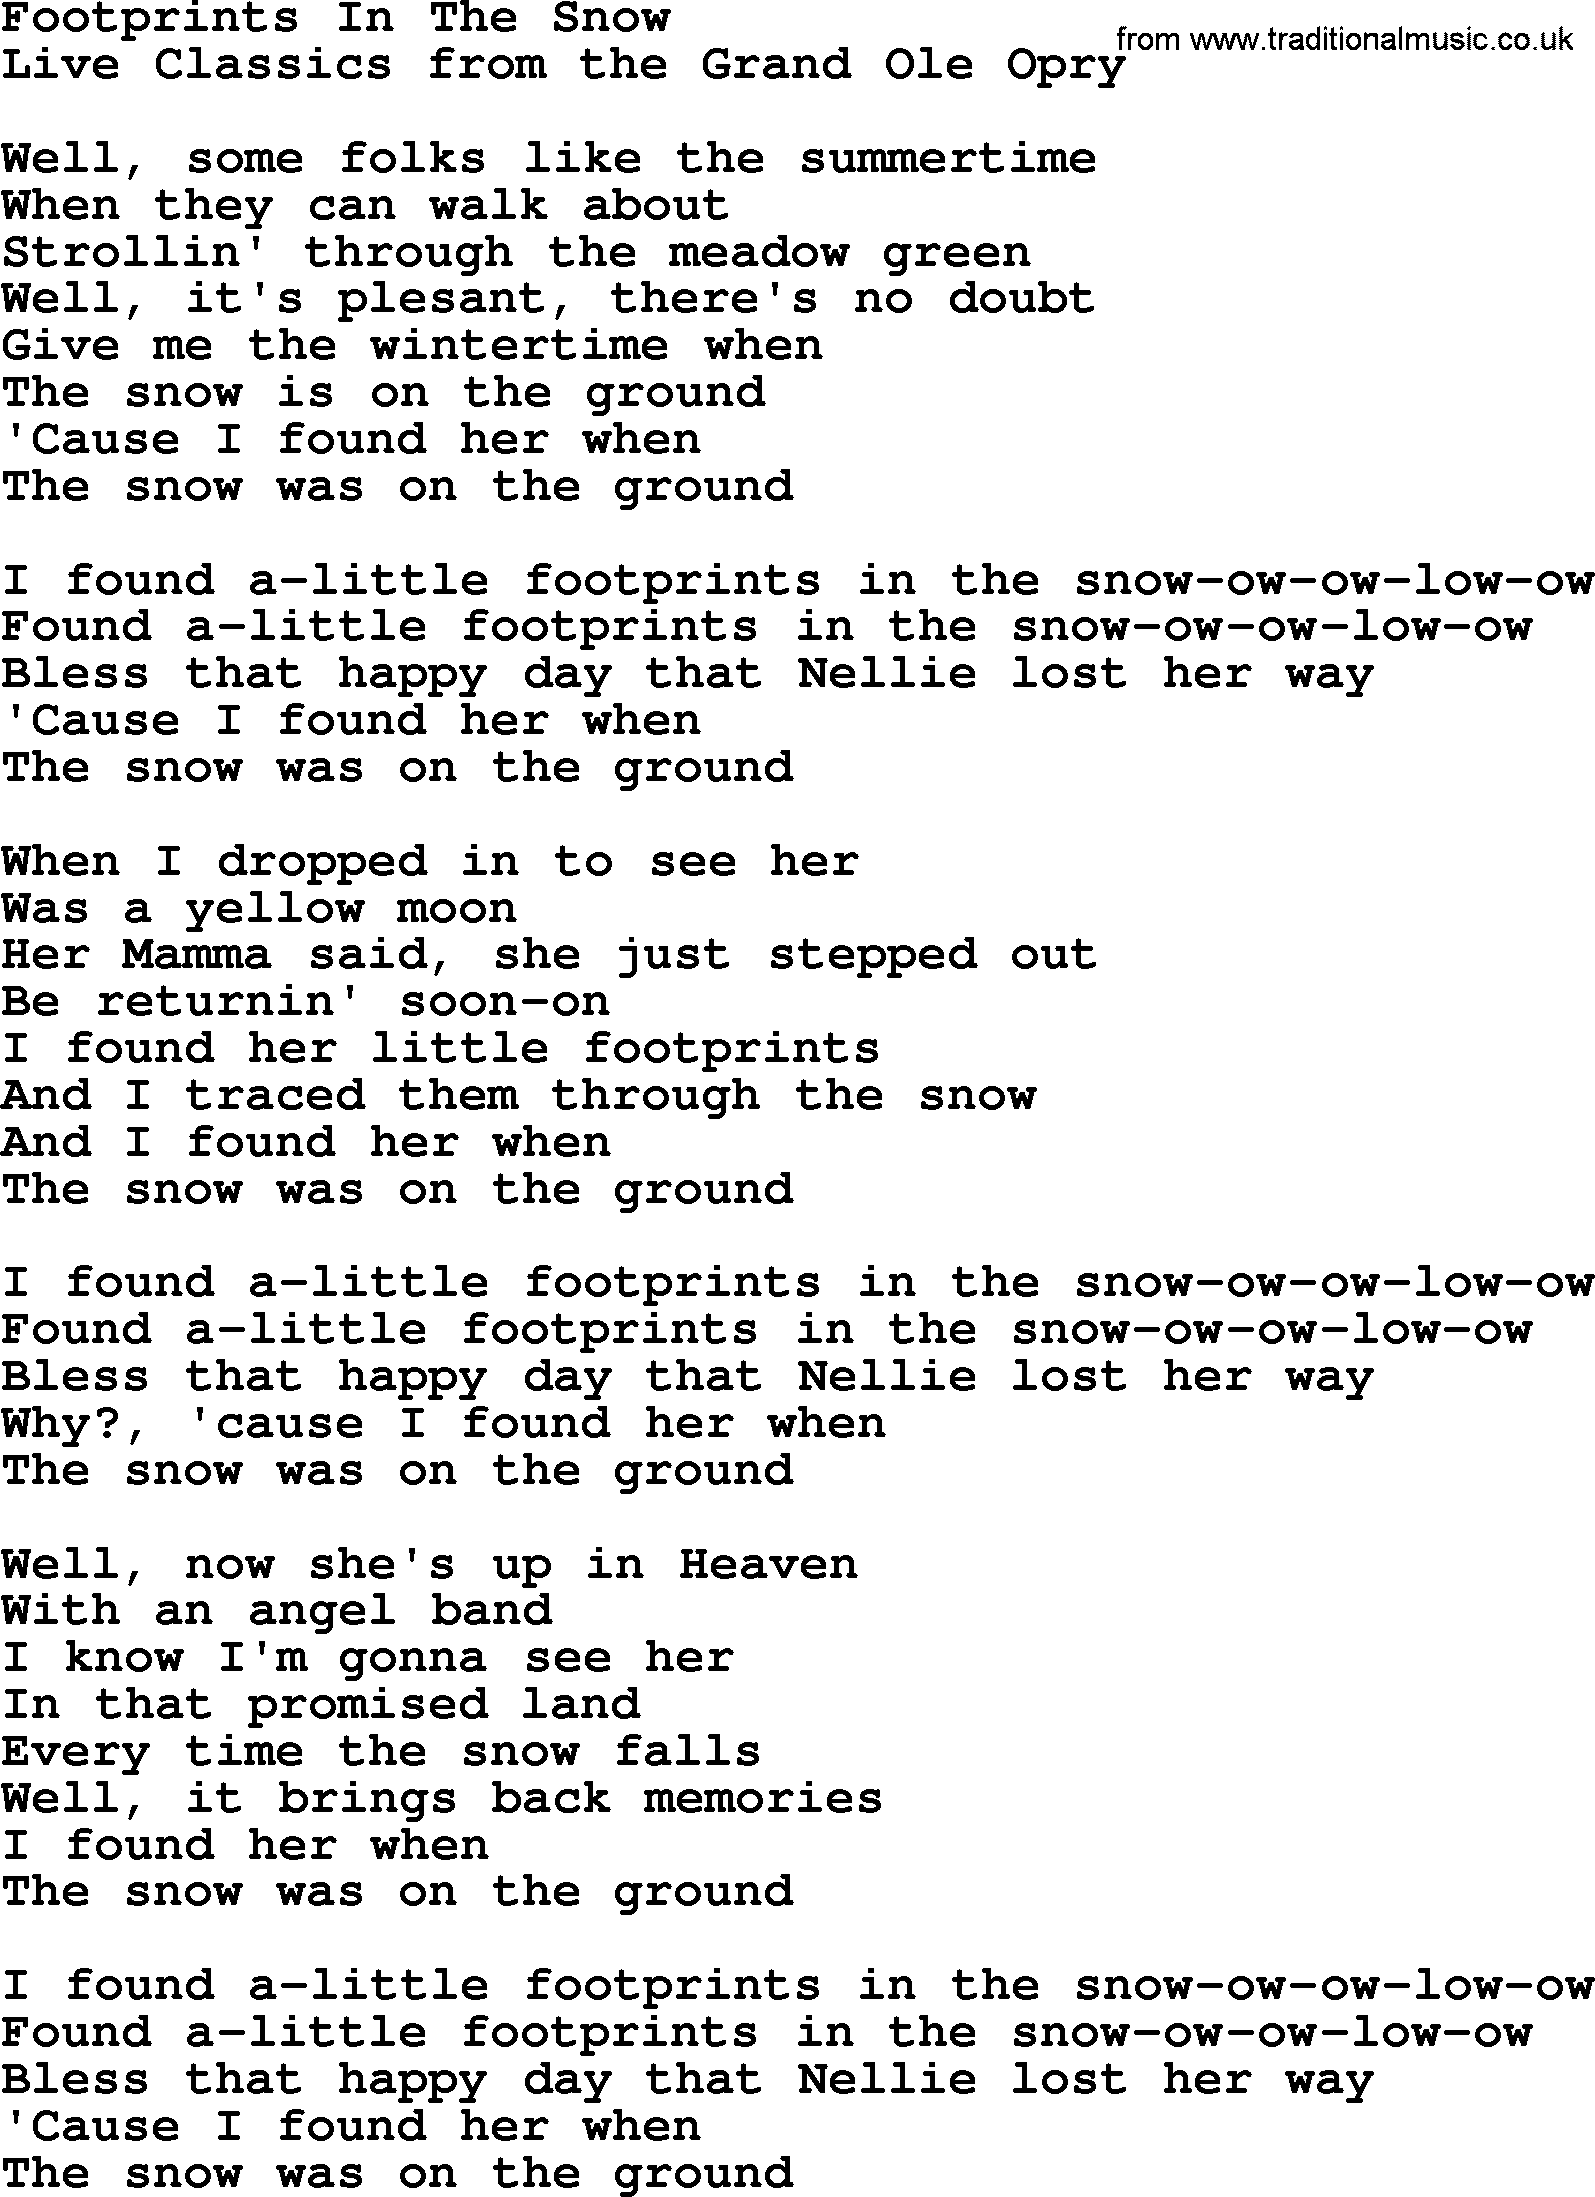 Marty Robbins song: Footprints In The Snow, lyrics